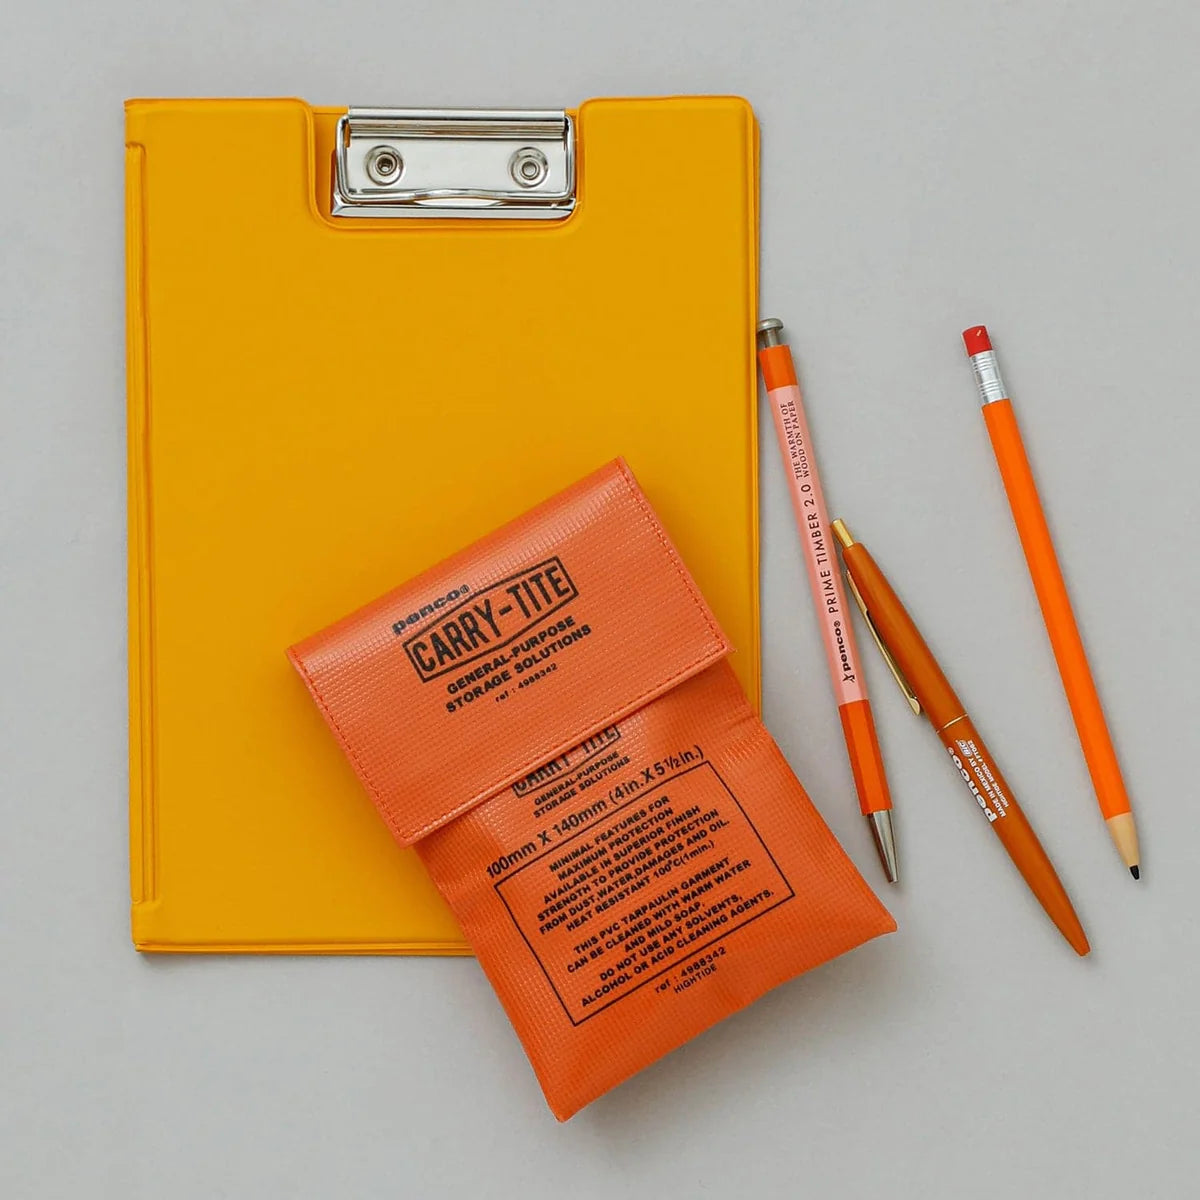 Hightide Penco Carry Tite Case (S) in Orange